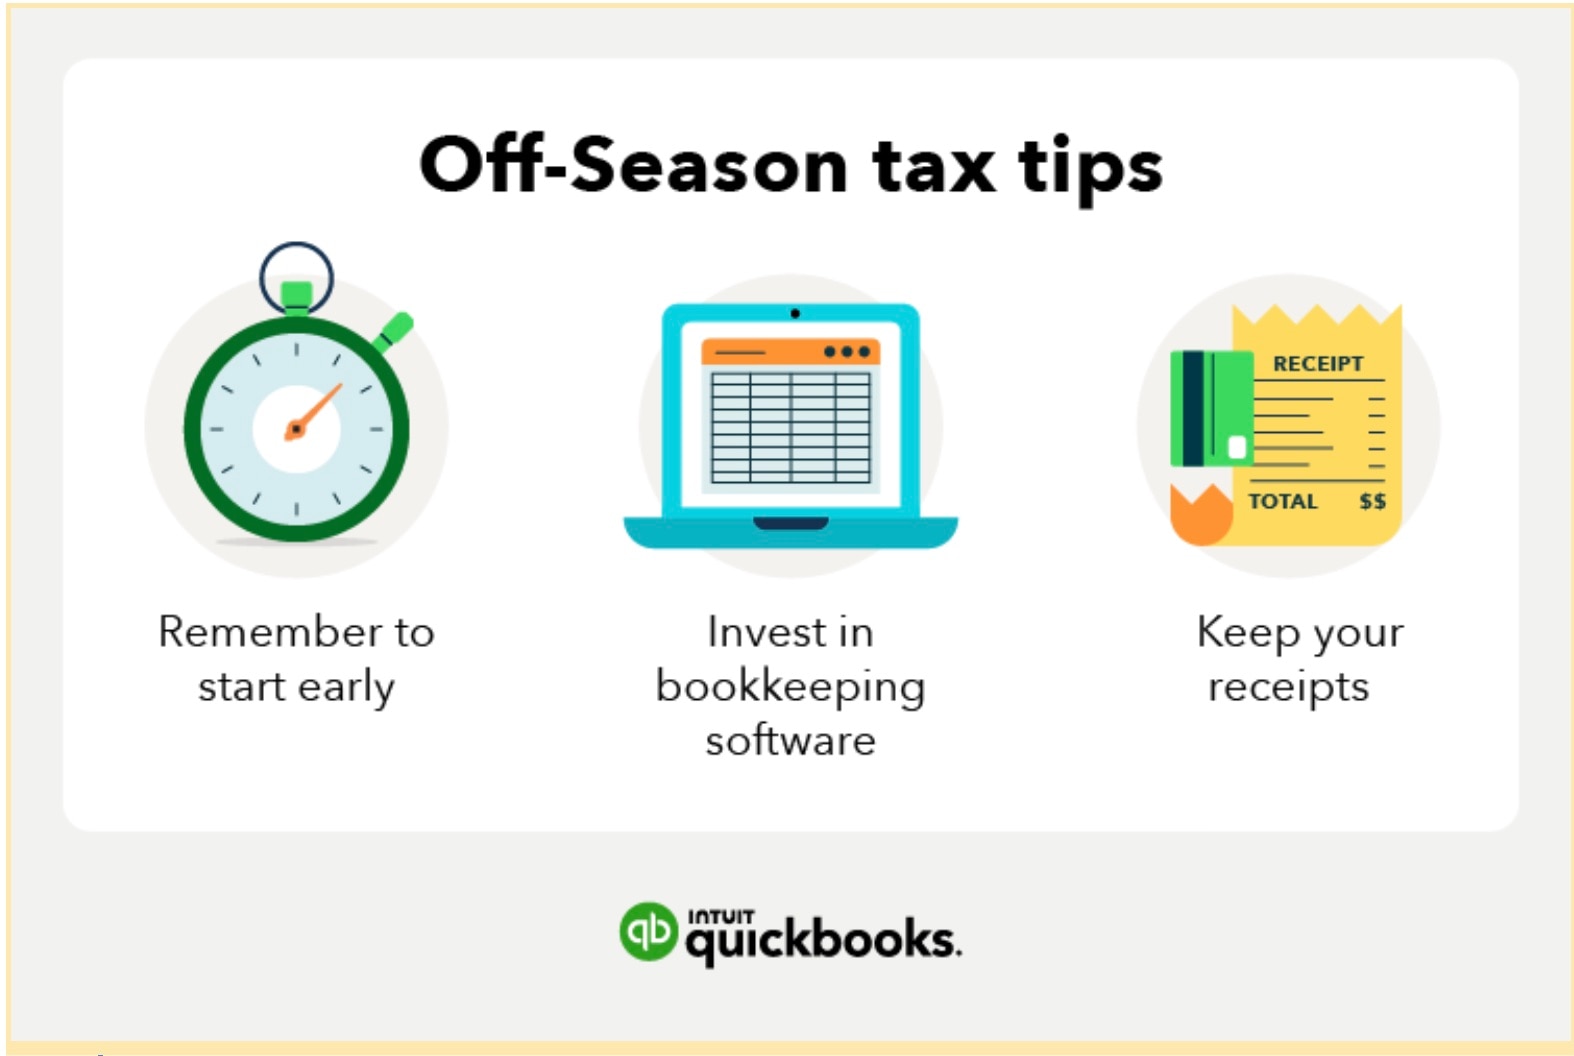 Off-season tax tips 2023.